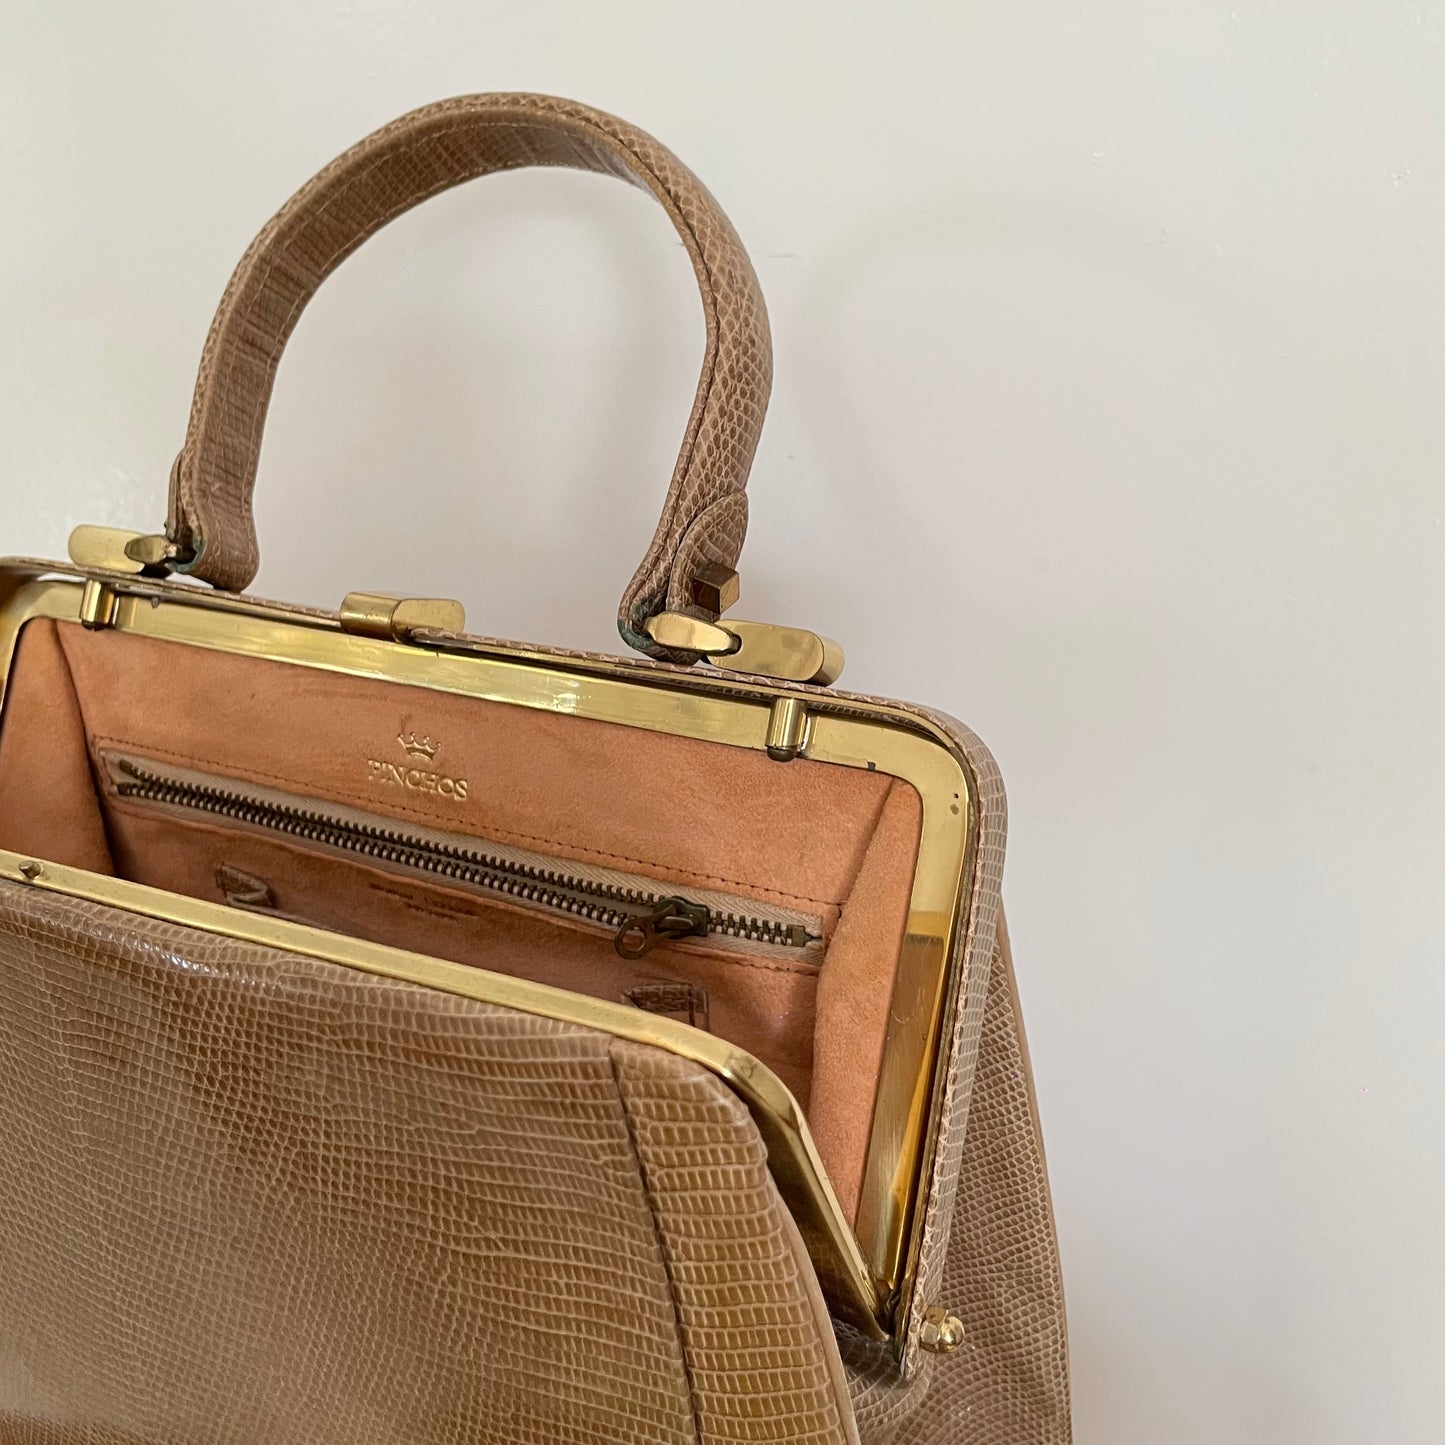 Vintage 1950s Ladies frame bag in Sand made in Australia